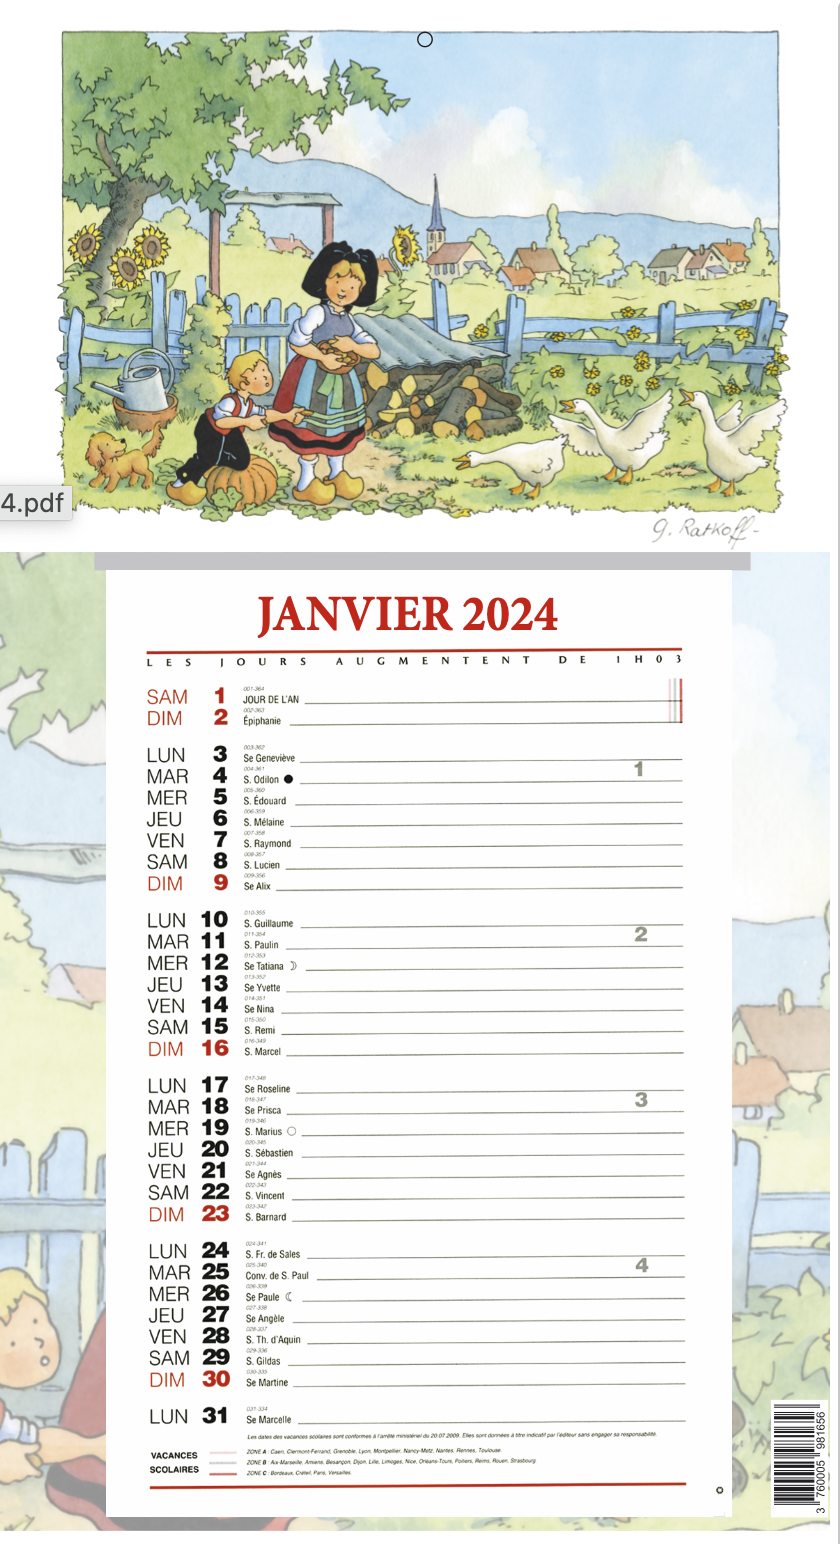 CALENDRIER EPHEMERIDE 2024 l'Alsace de Georges RATKOFF - 22.0 x